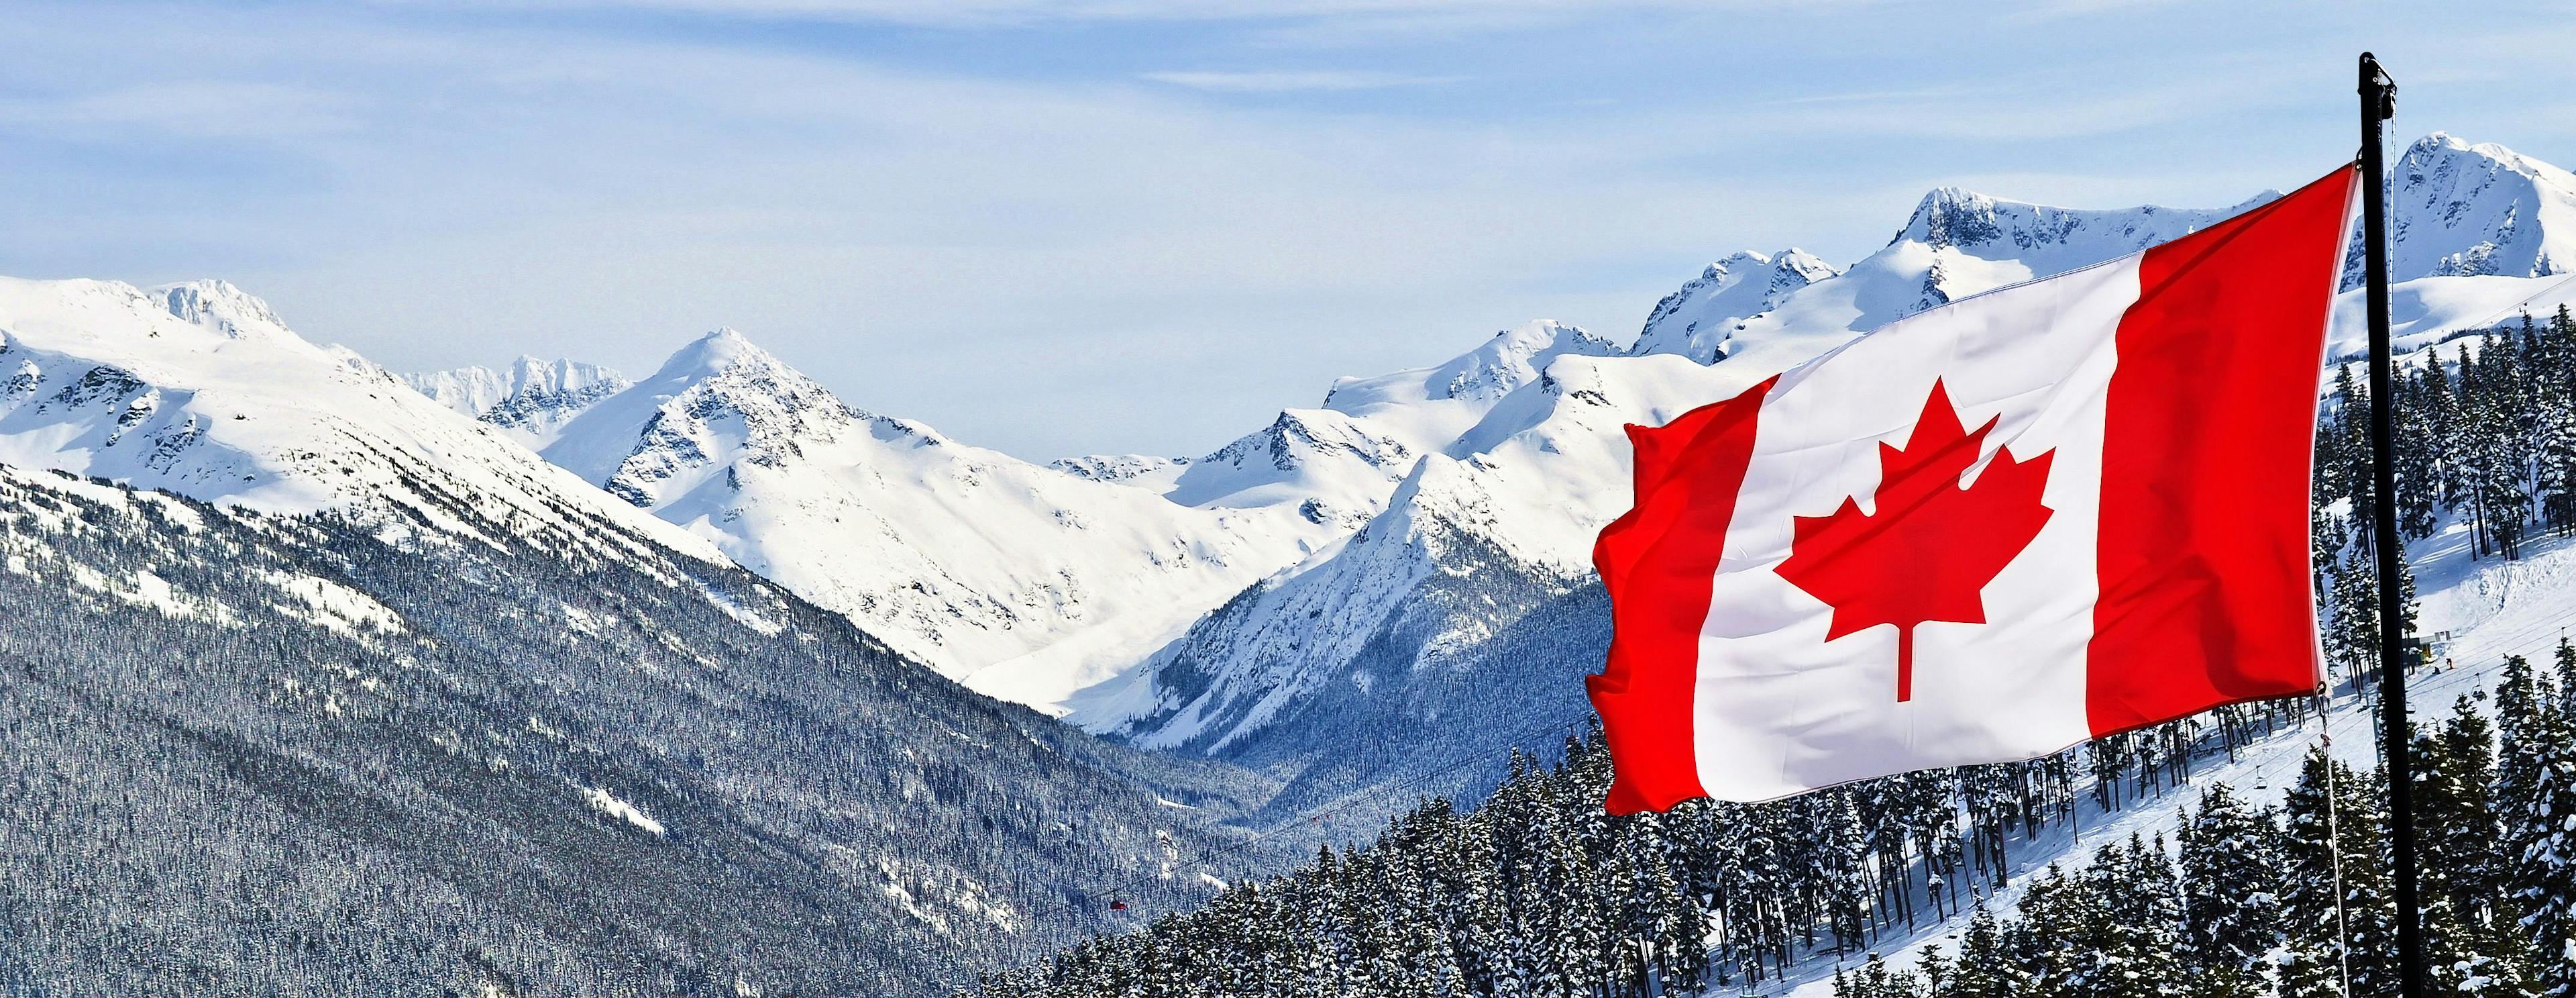 canadian flag on a mountain